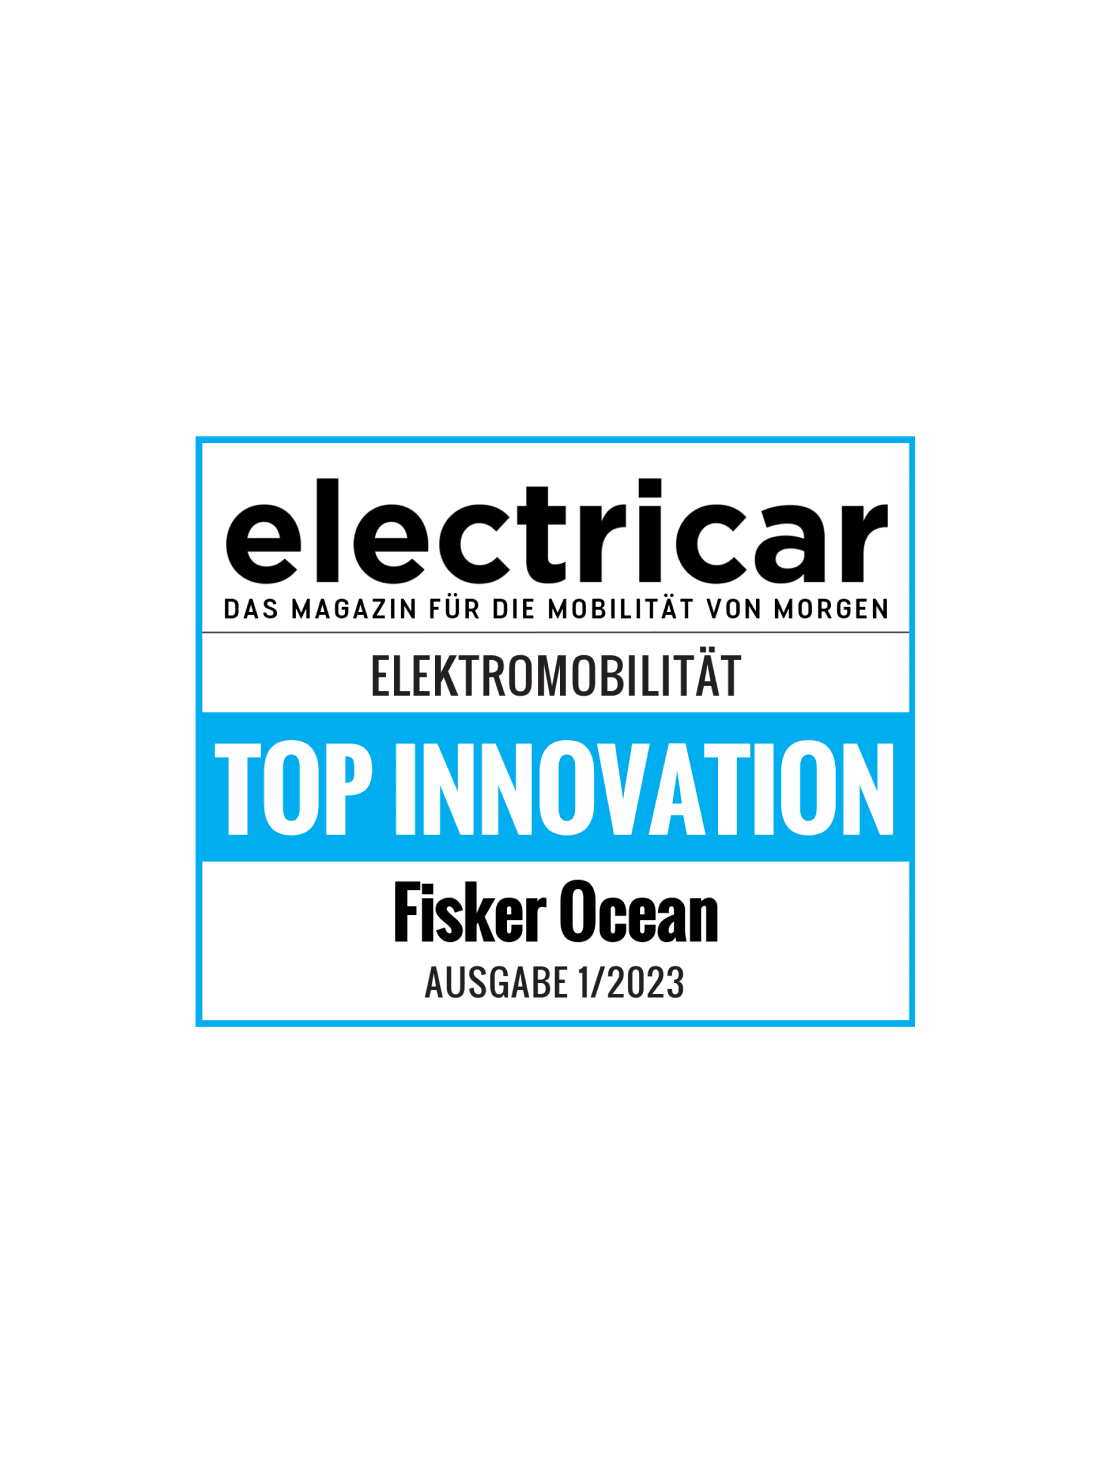 Electric Car Innovation Award